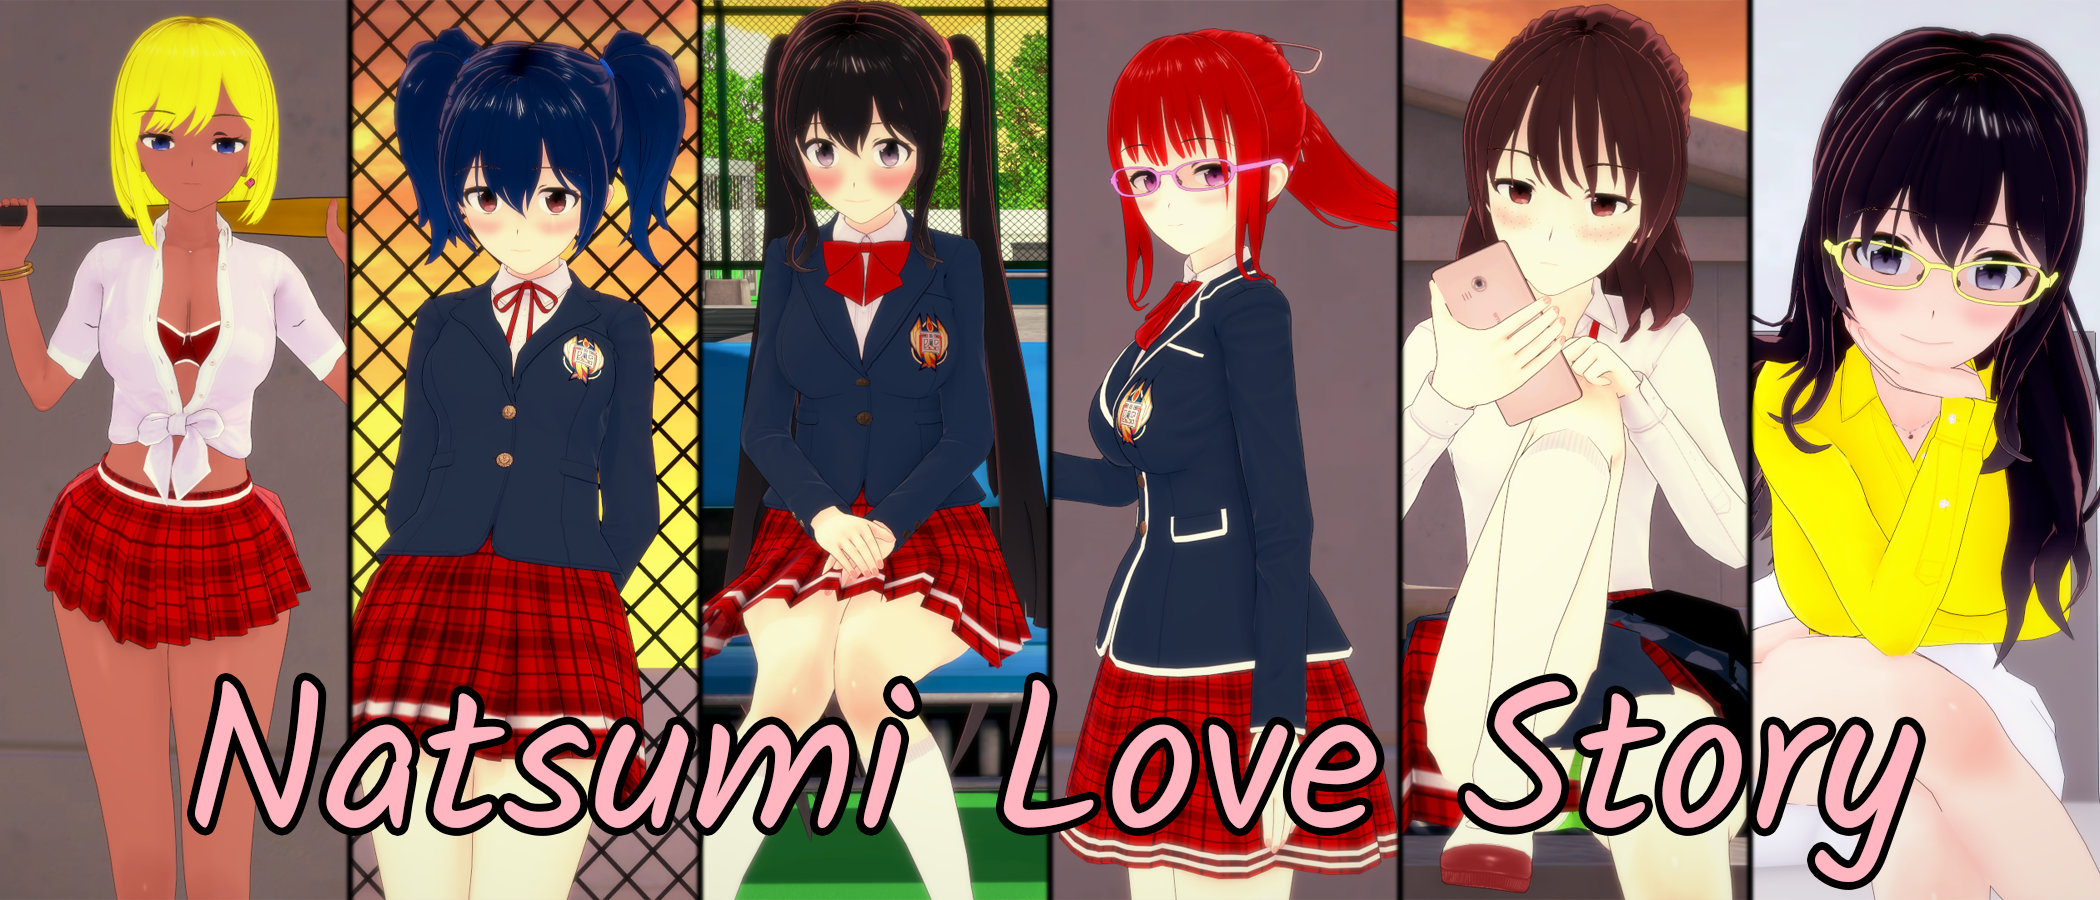 Download Free Hentai Game Porn Games Natsumi Love Story